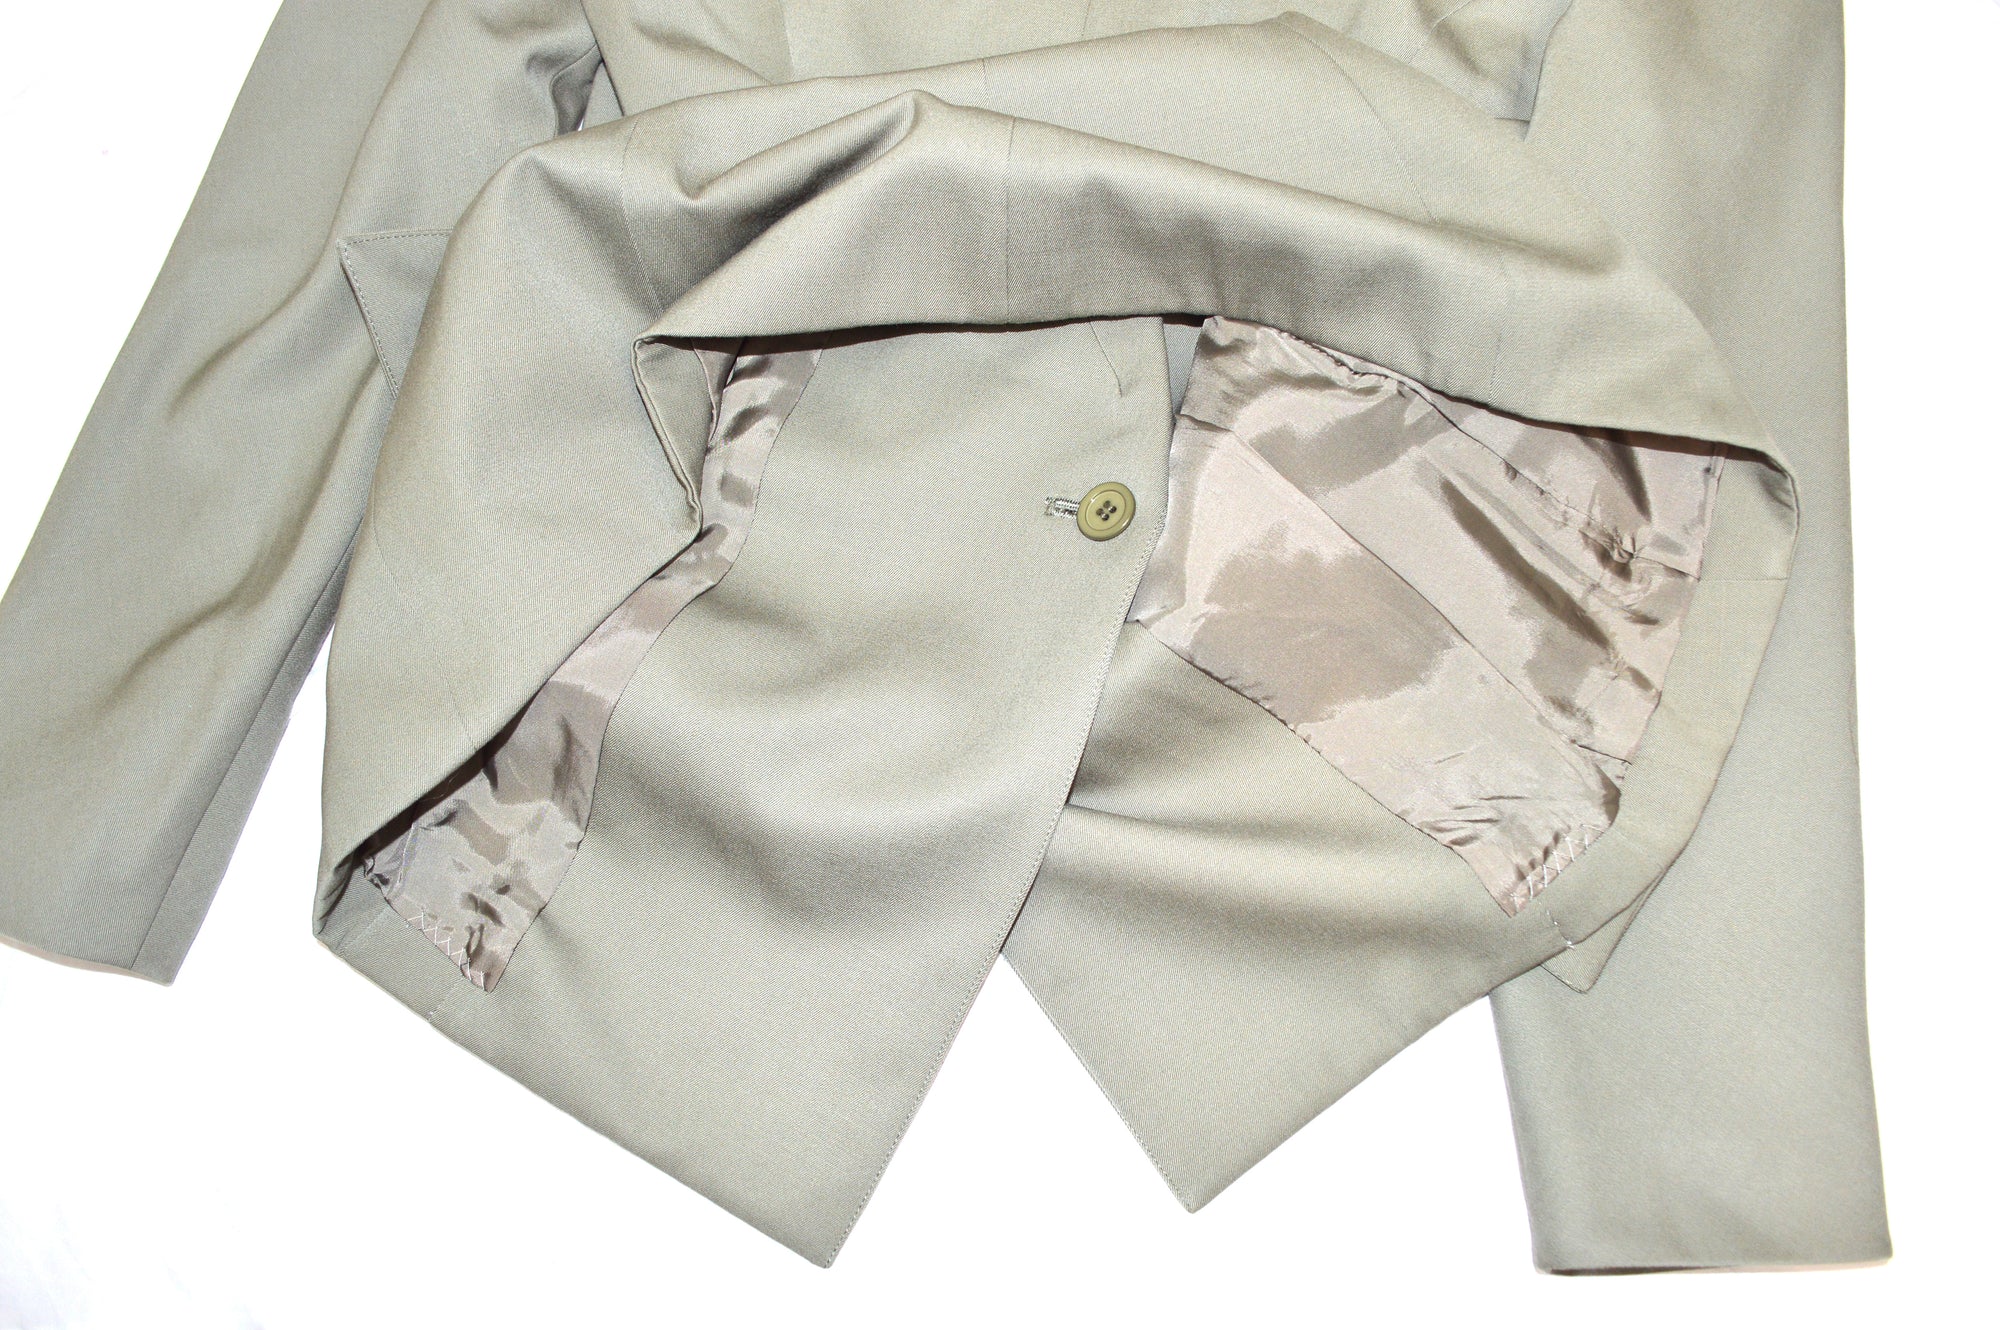 Junko Shimada 1991 Lace Up Skirt Suit